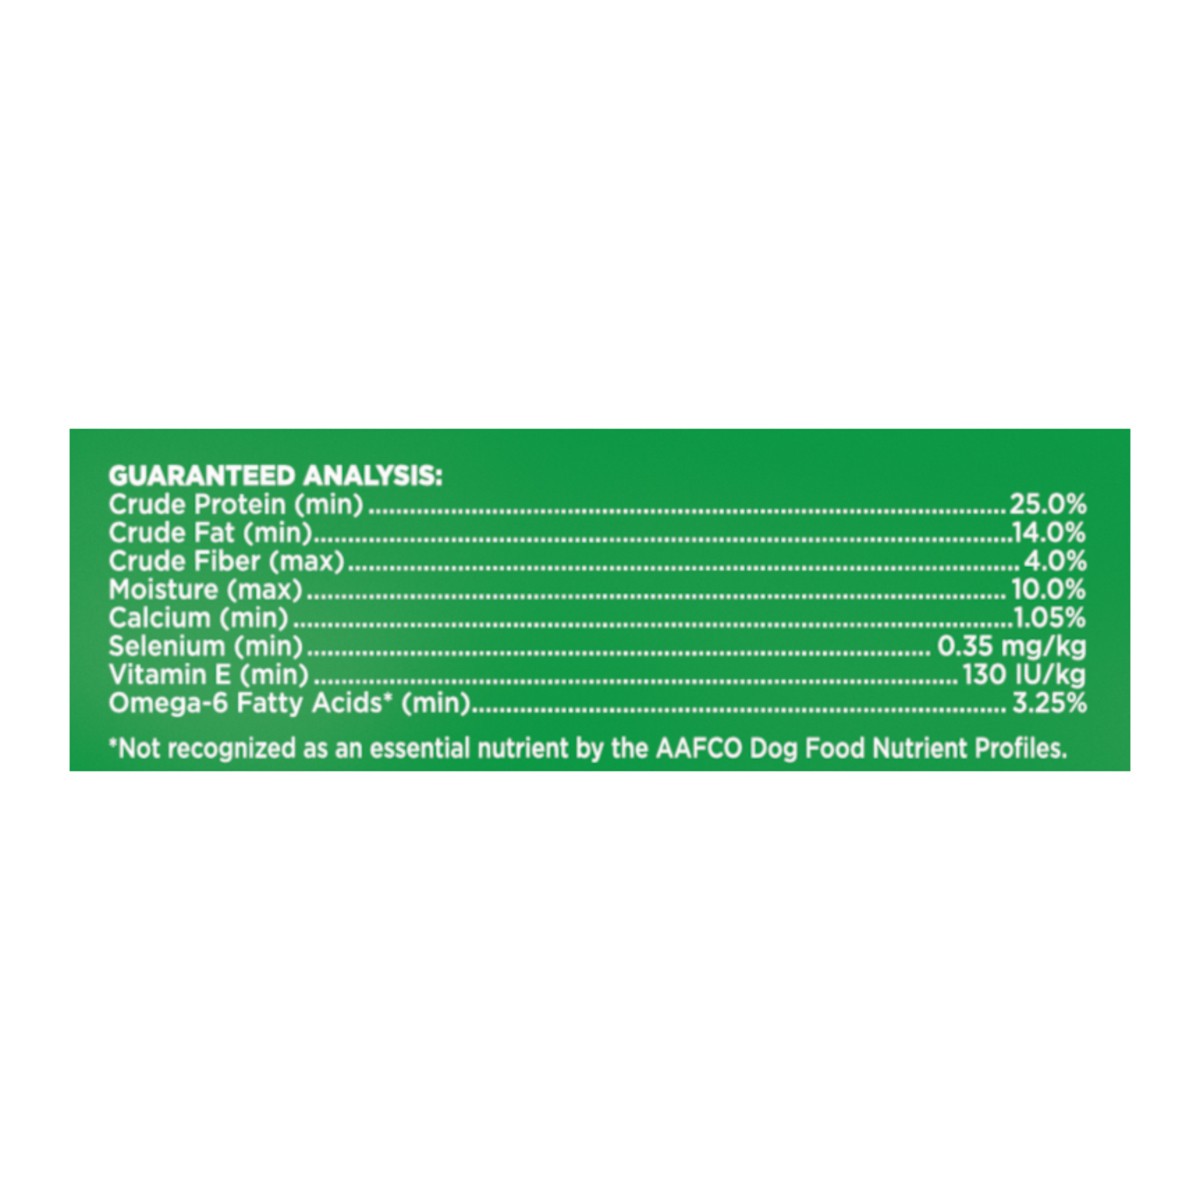 slide 11 of 15, Proactive Health Adult 1+ Minichunks Chicken & Whole Grain Recipe Dog Food 38.5 lb, 38.5 lb